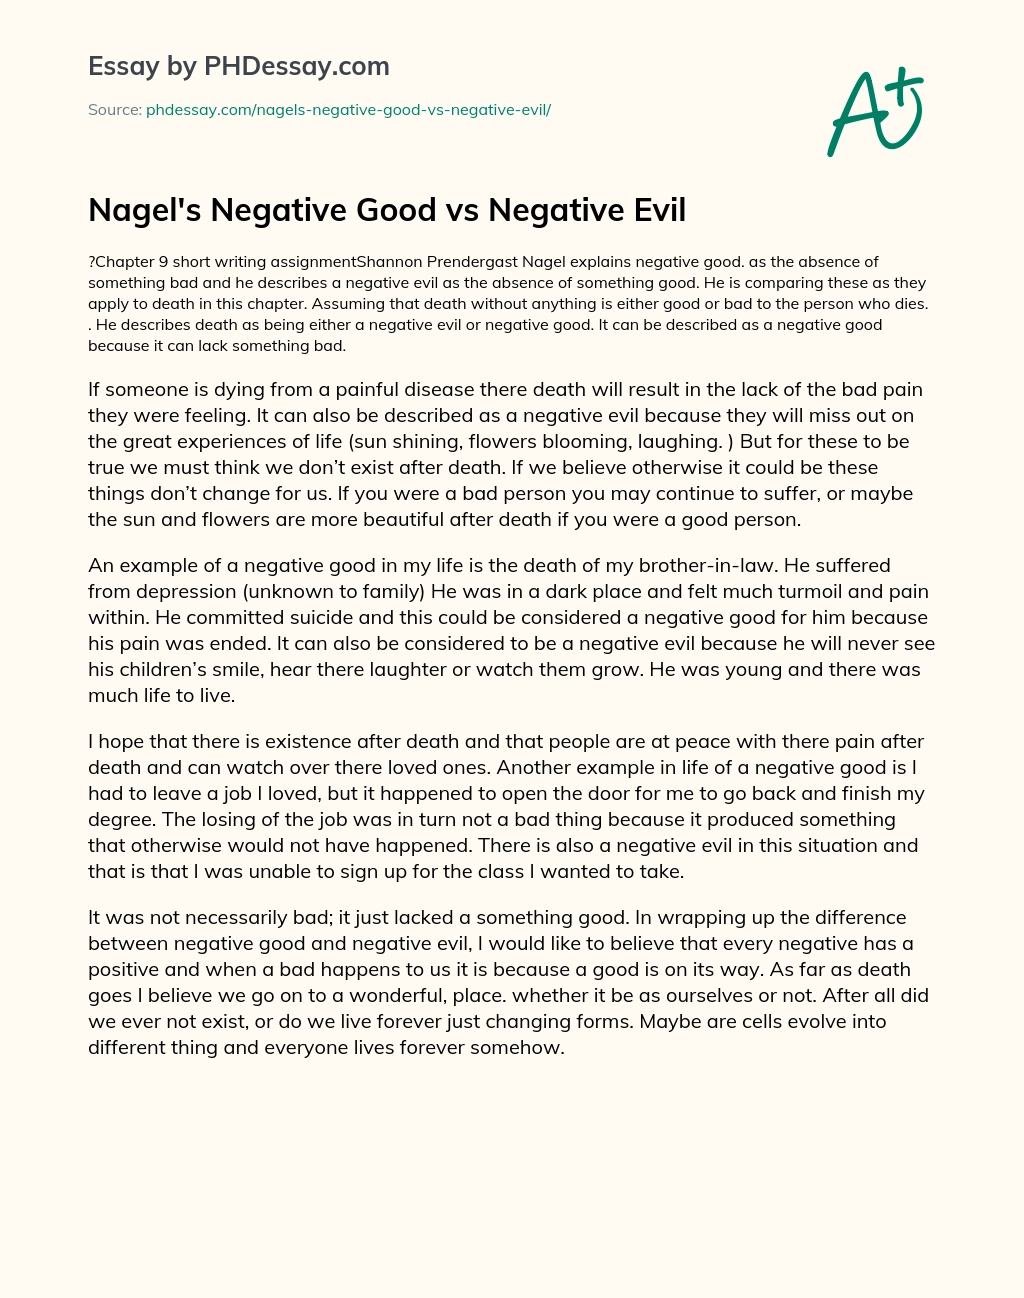 Nagel’s Negative Good vs Negative Evil essay